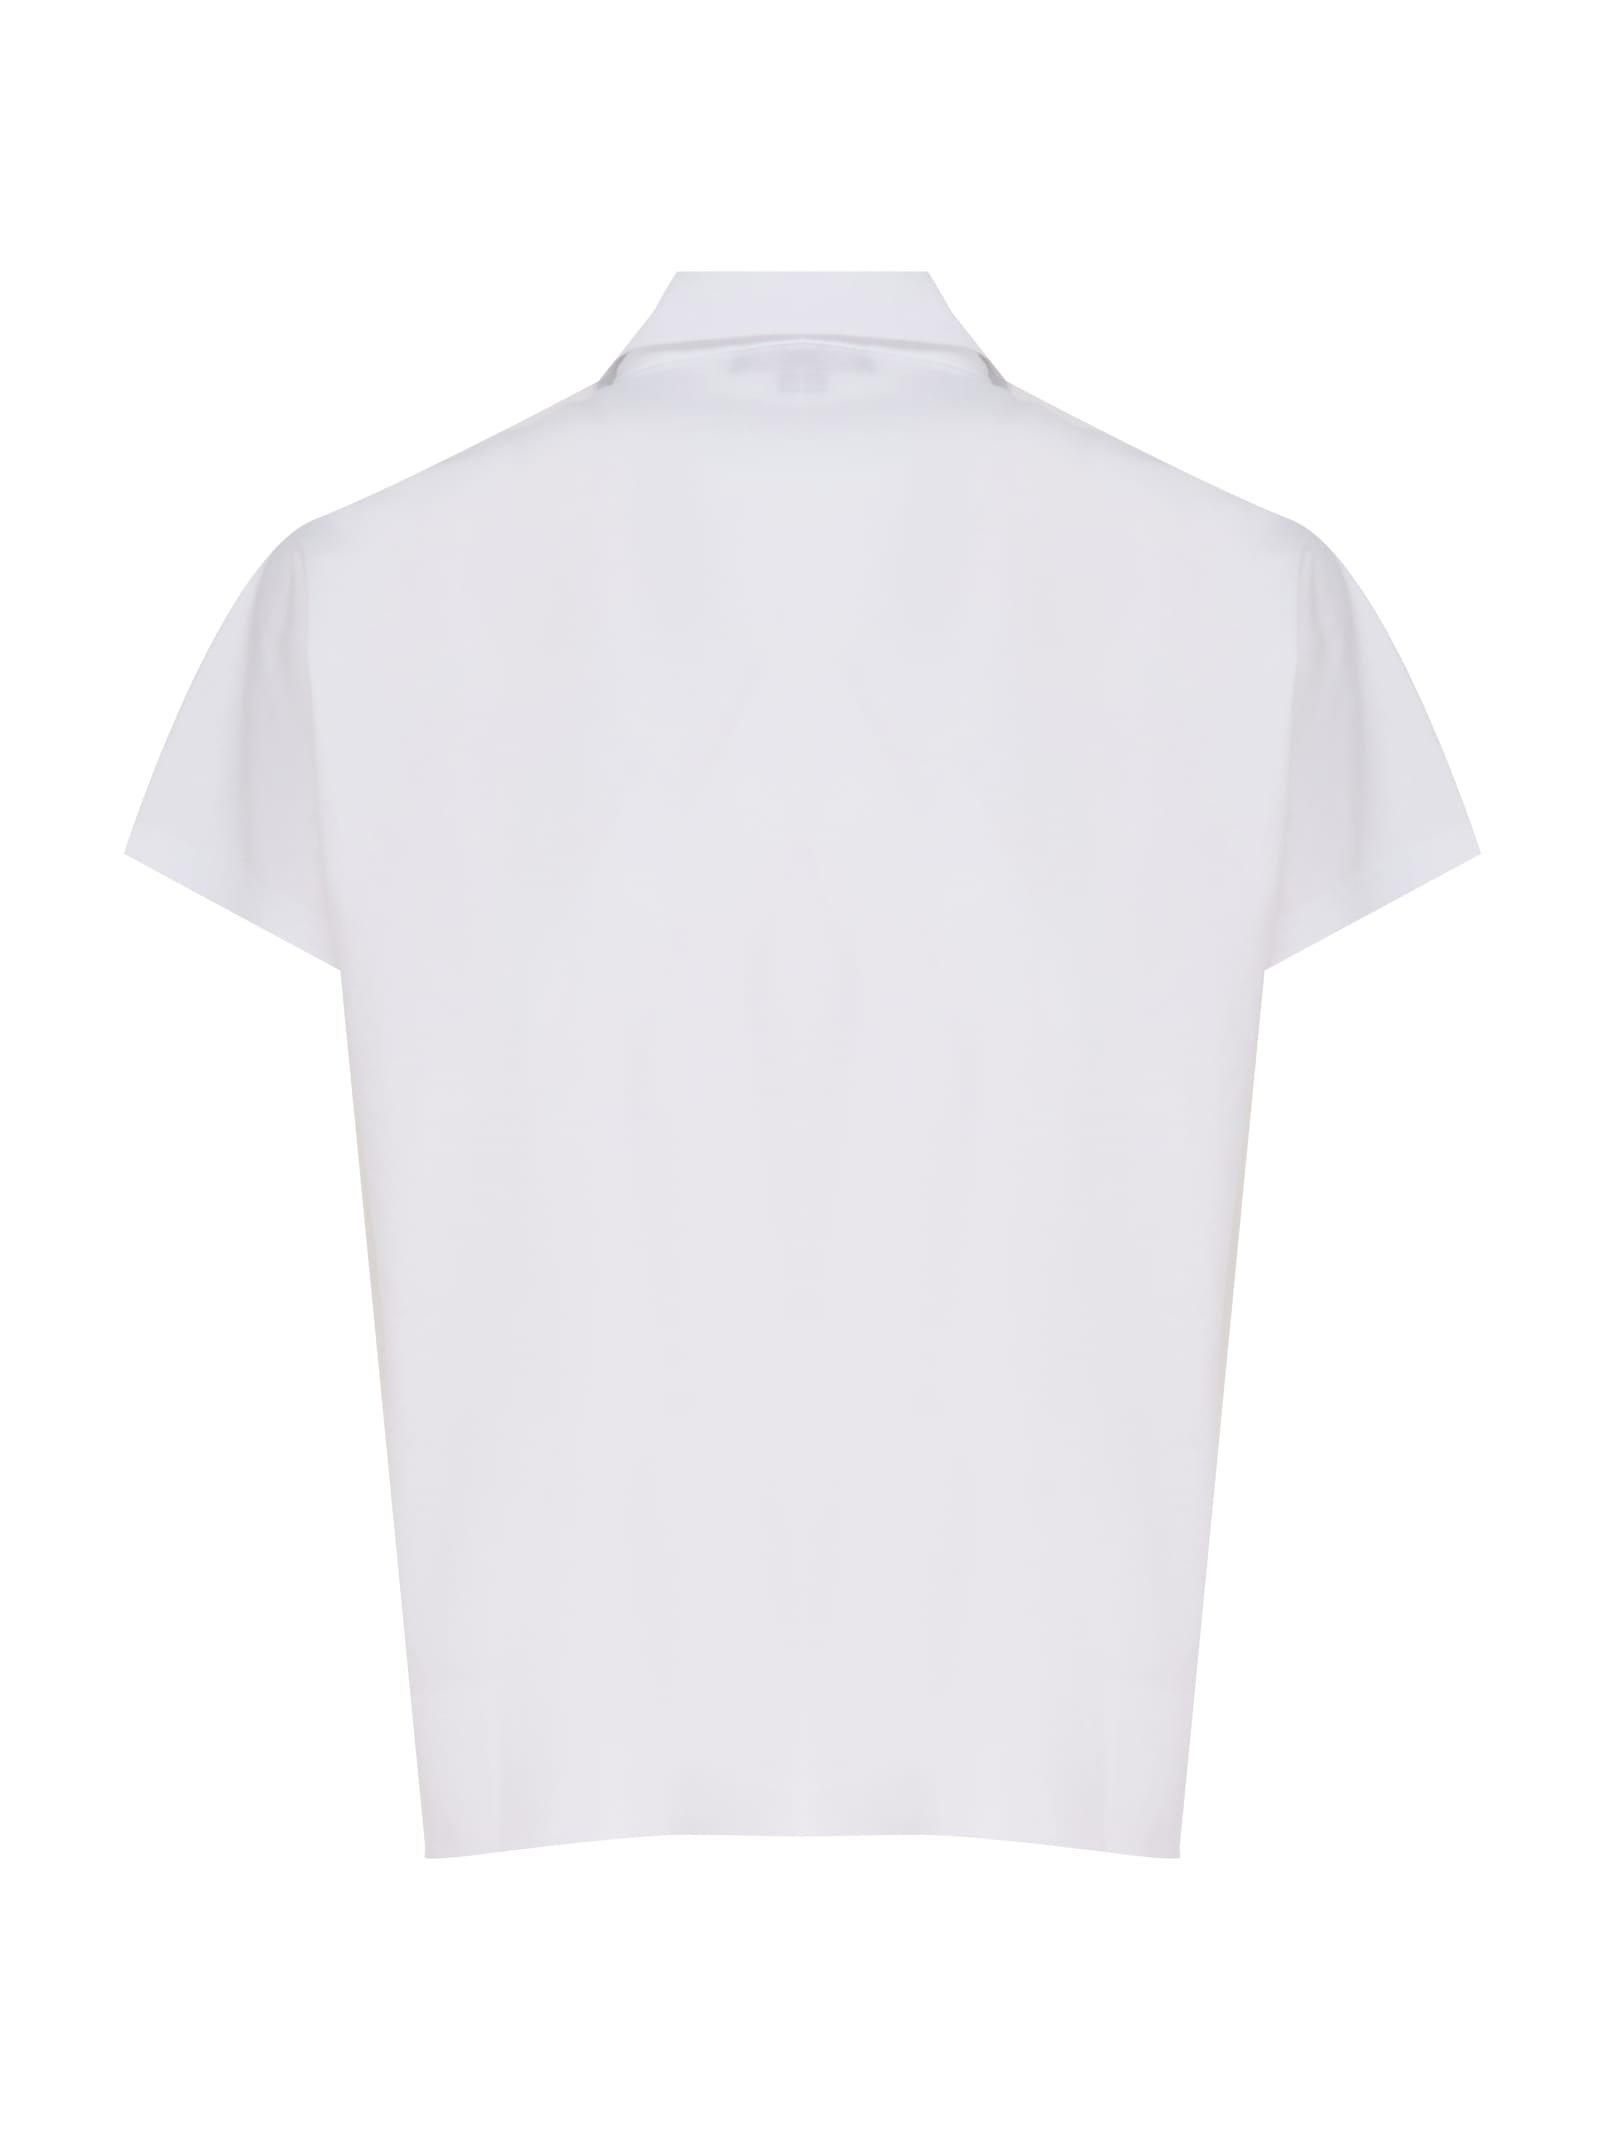 Shop Fay Short Sleeve Polo Shirt